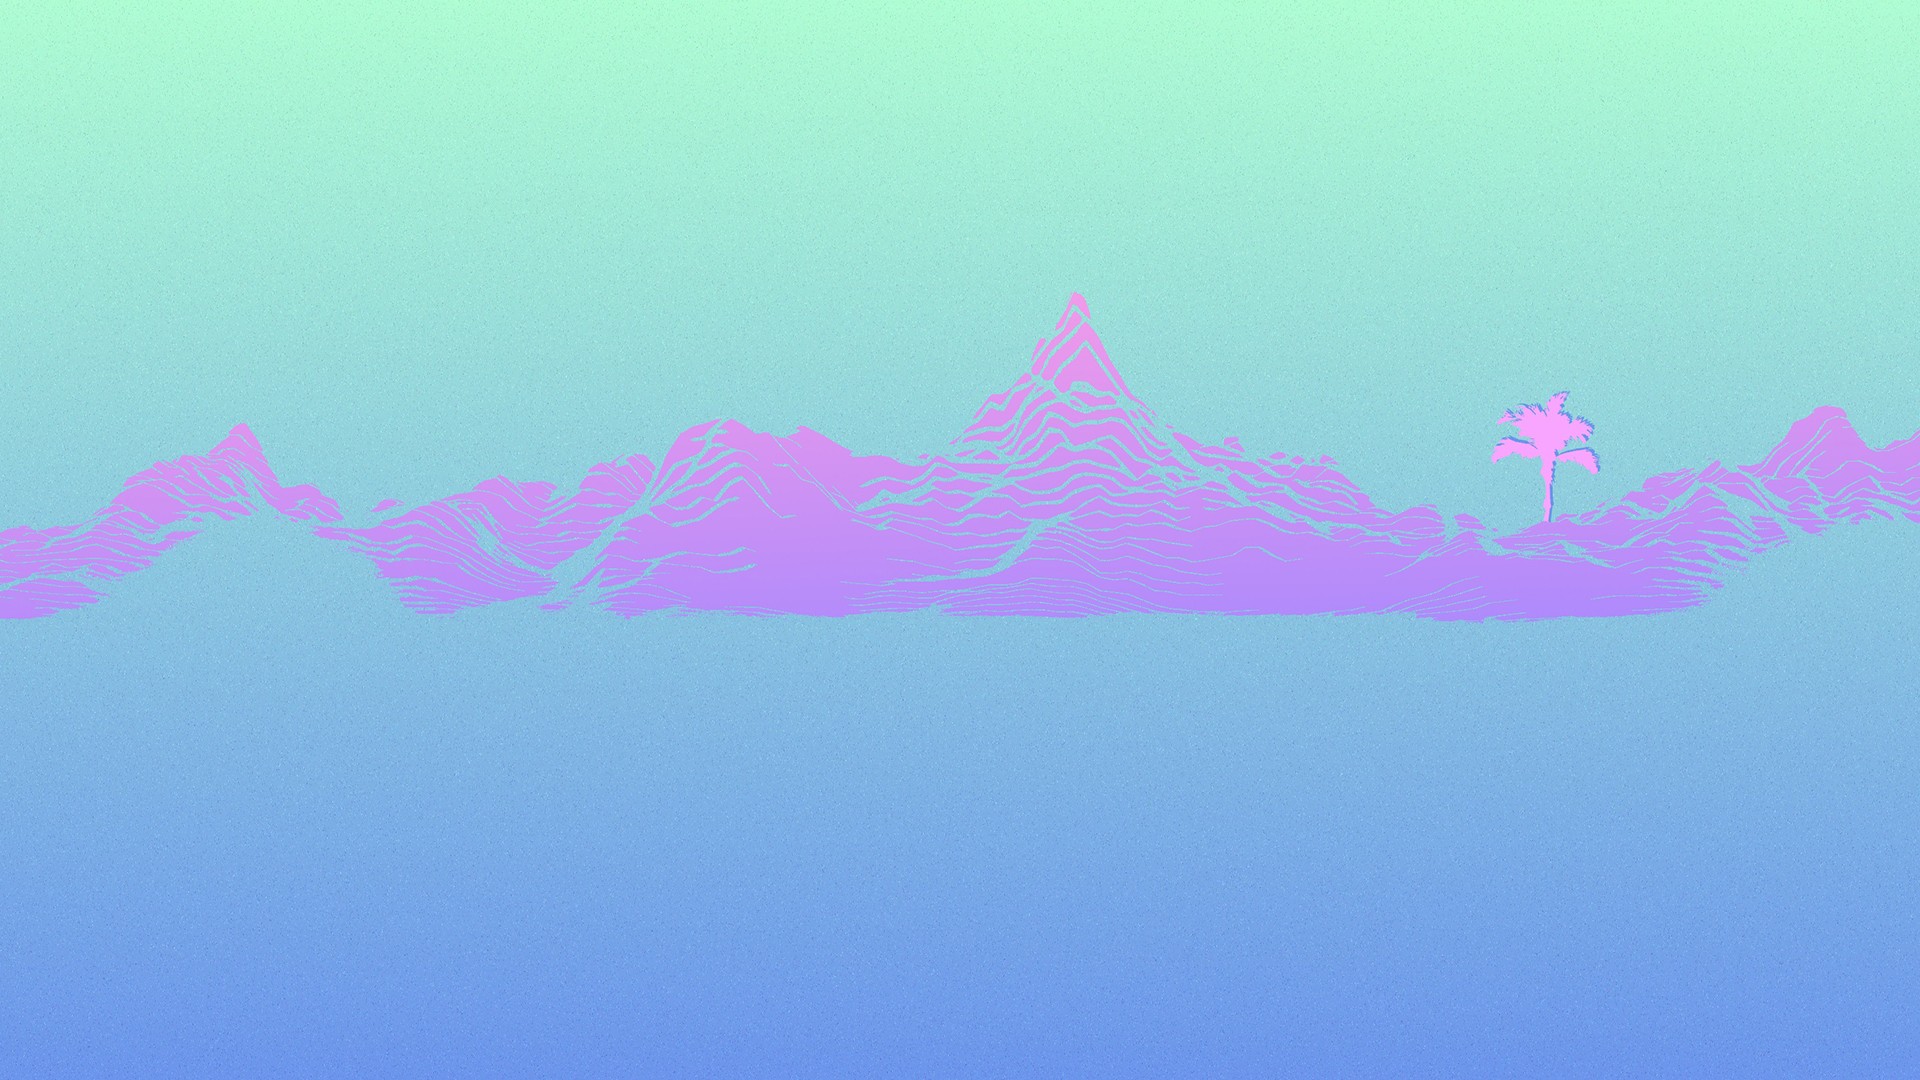 General 1920x1080 neon mountains minimalism purple cyan